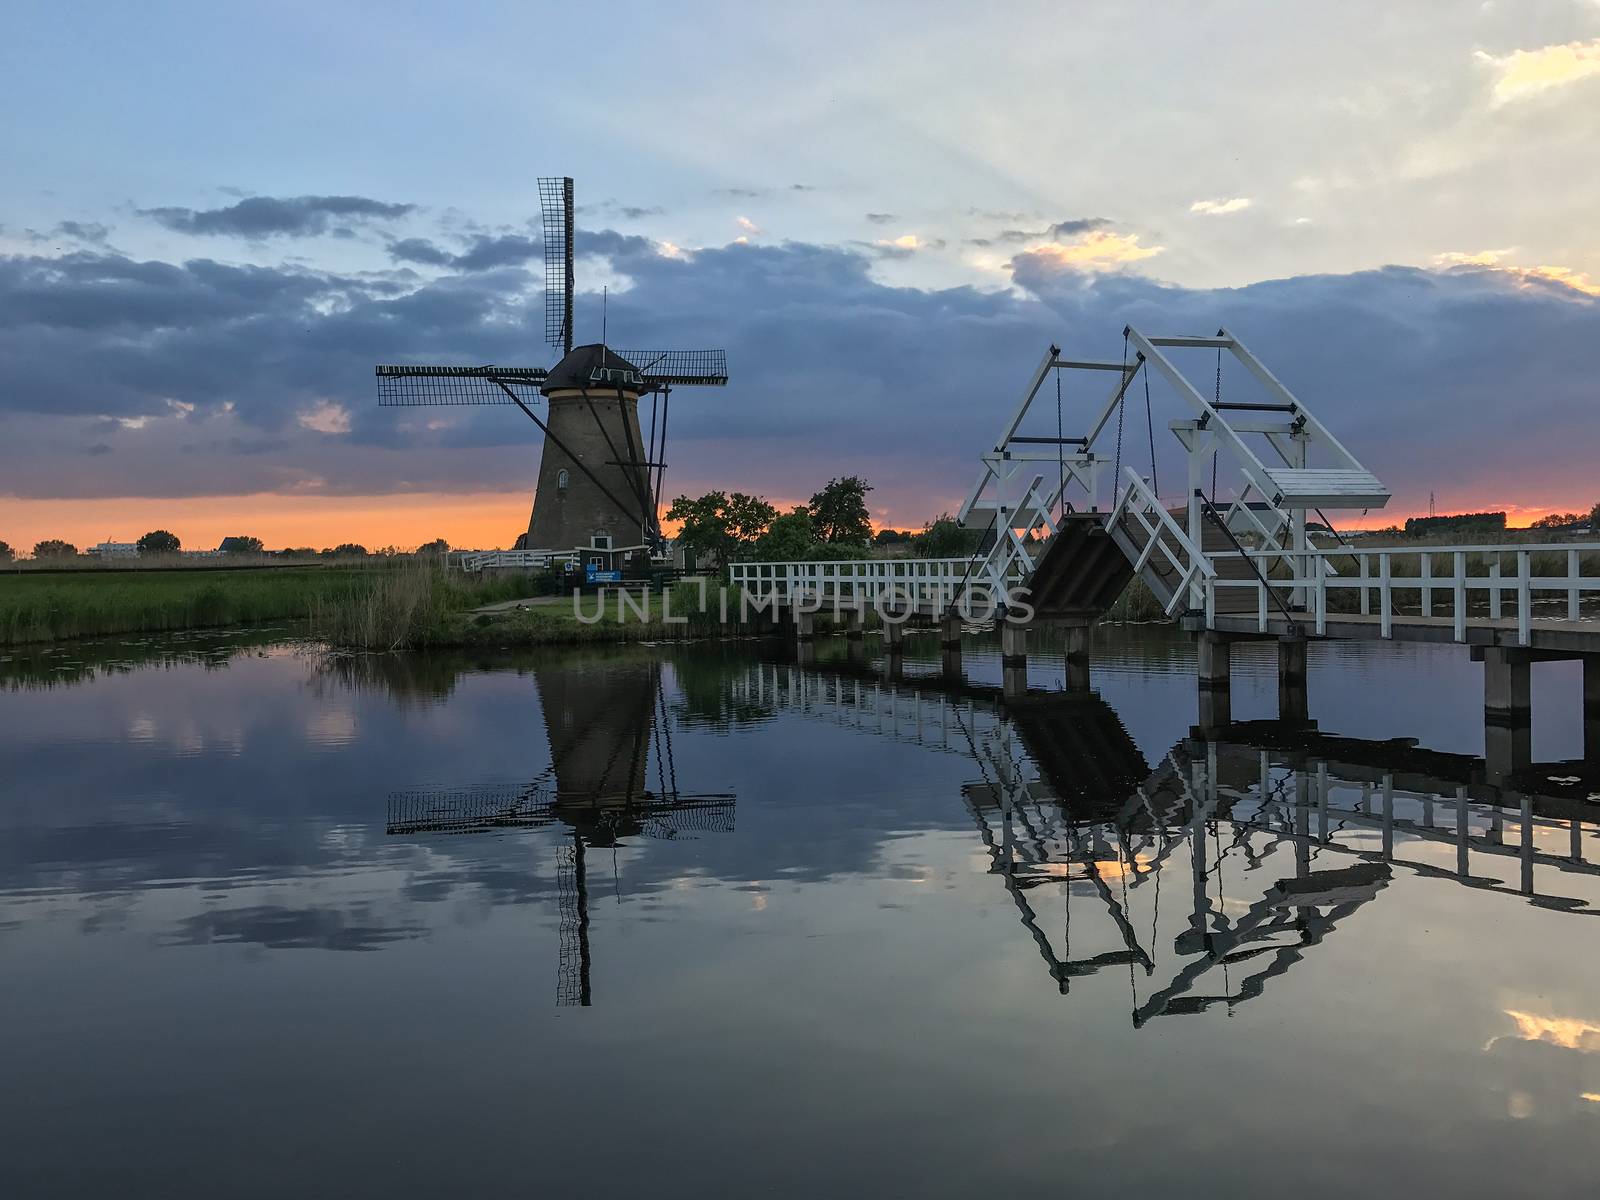 Beautiful dutch windmill landscape at the famous Kinderdijk canals, UNESCO world heritage site